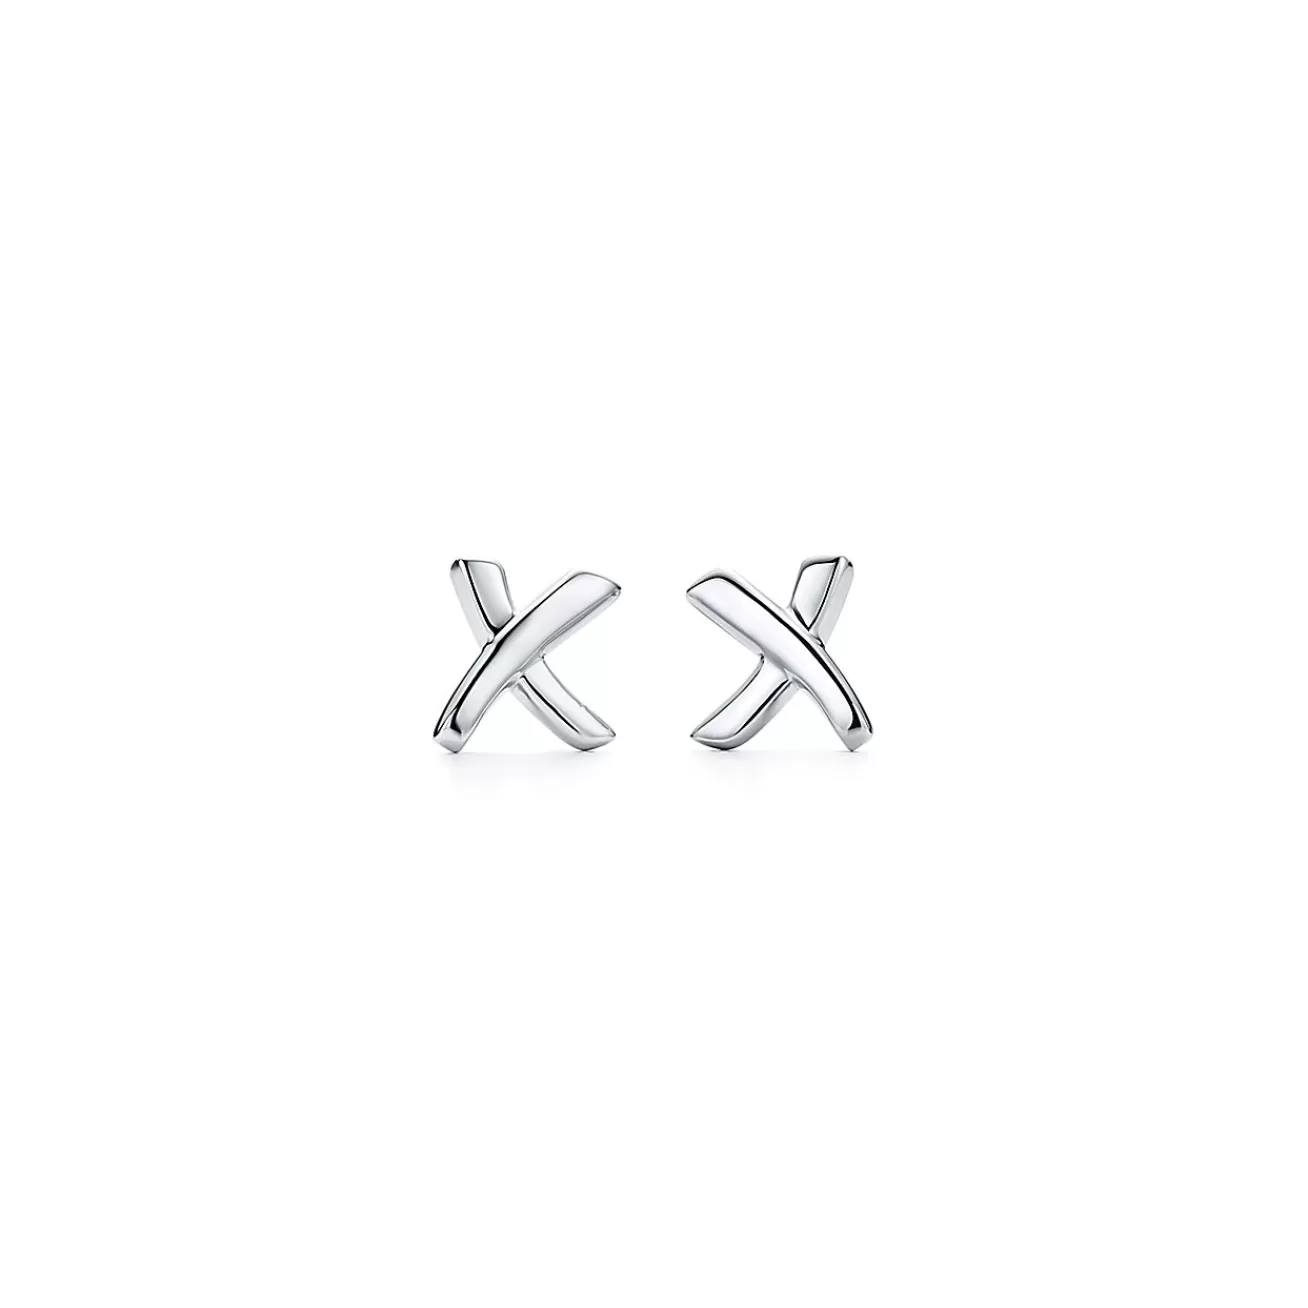 Tiffany & Co. Paloma's Graffiti X earrings in sterling silver, small. | ^ Earrings | Sterling Silver Jewelry